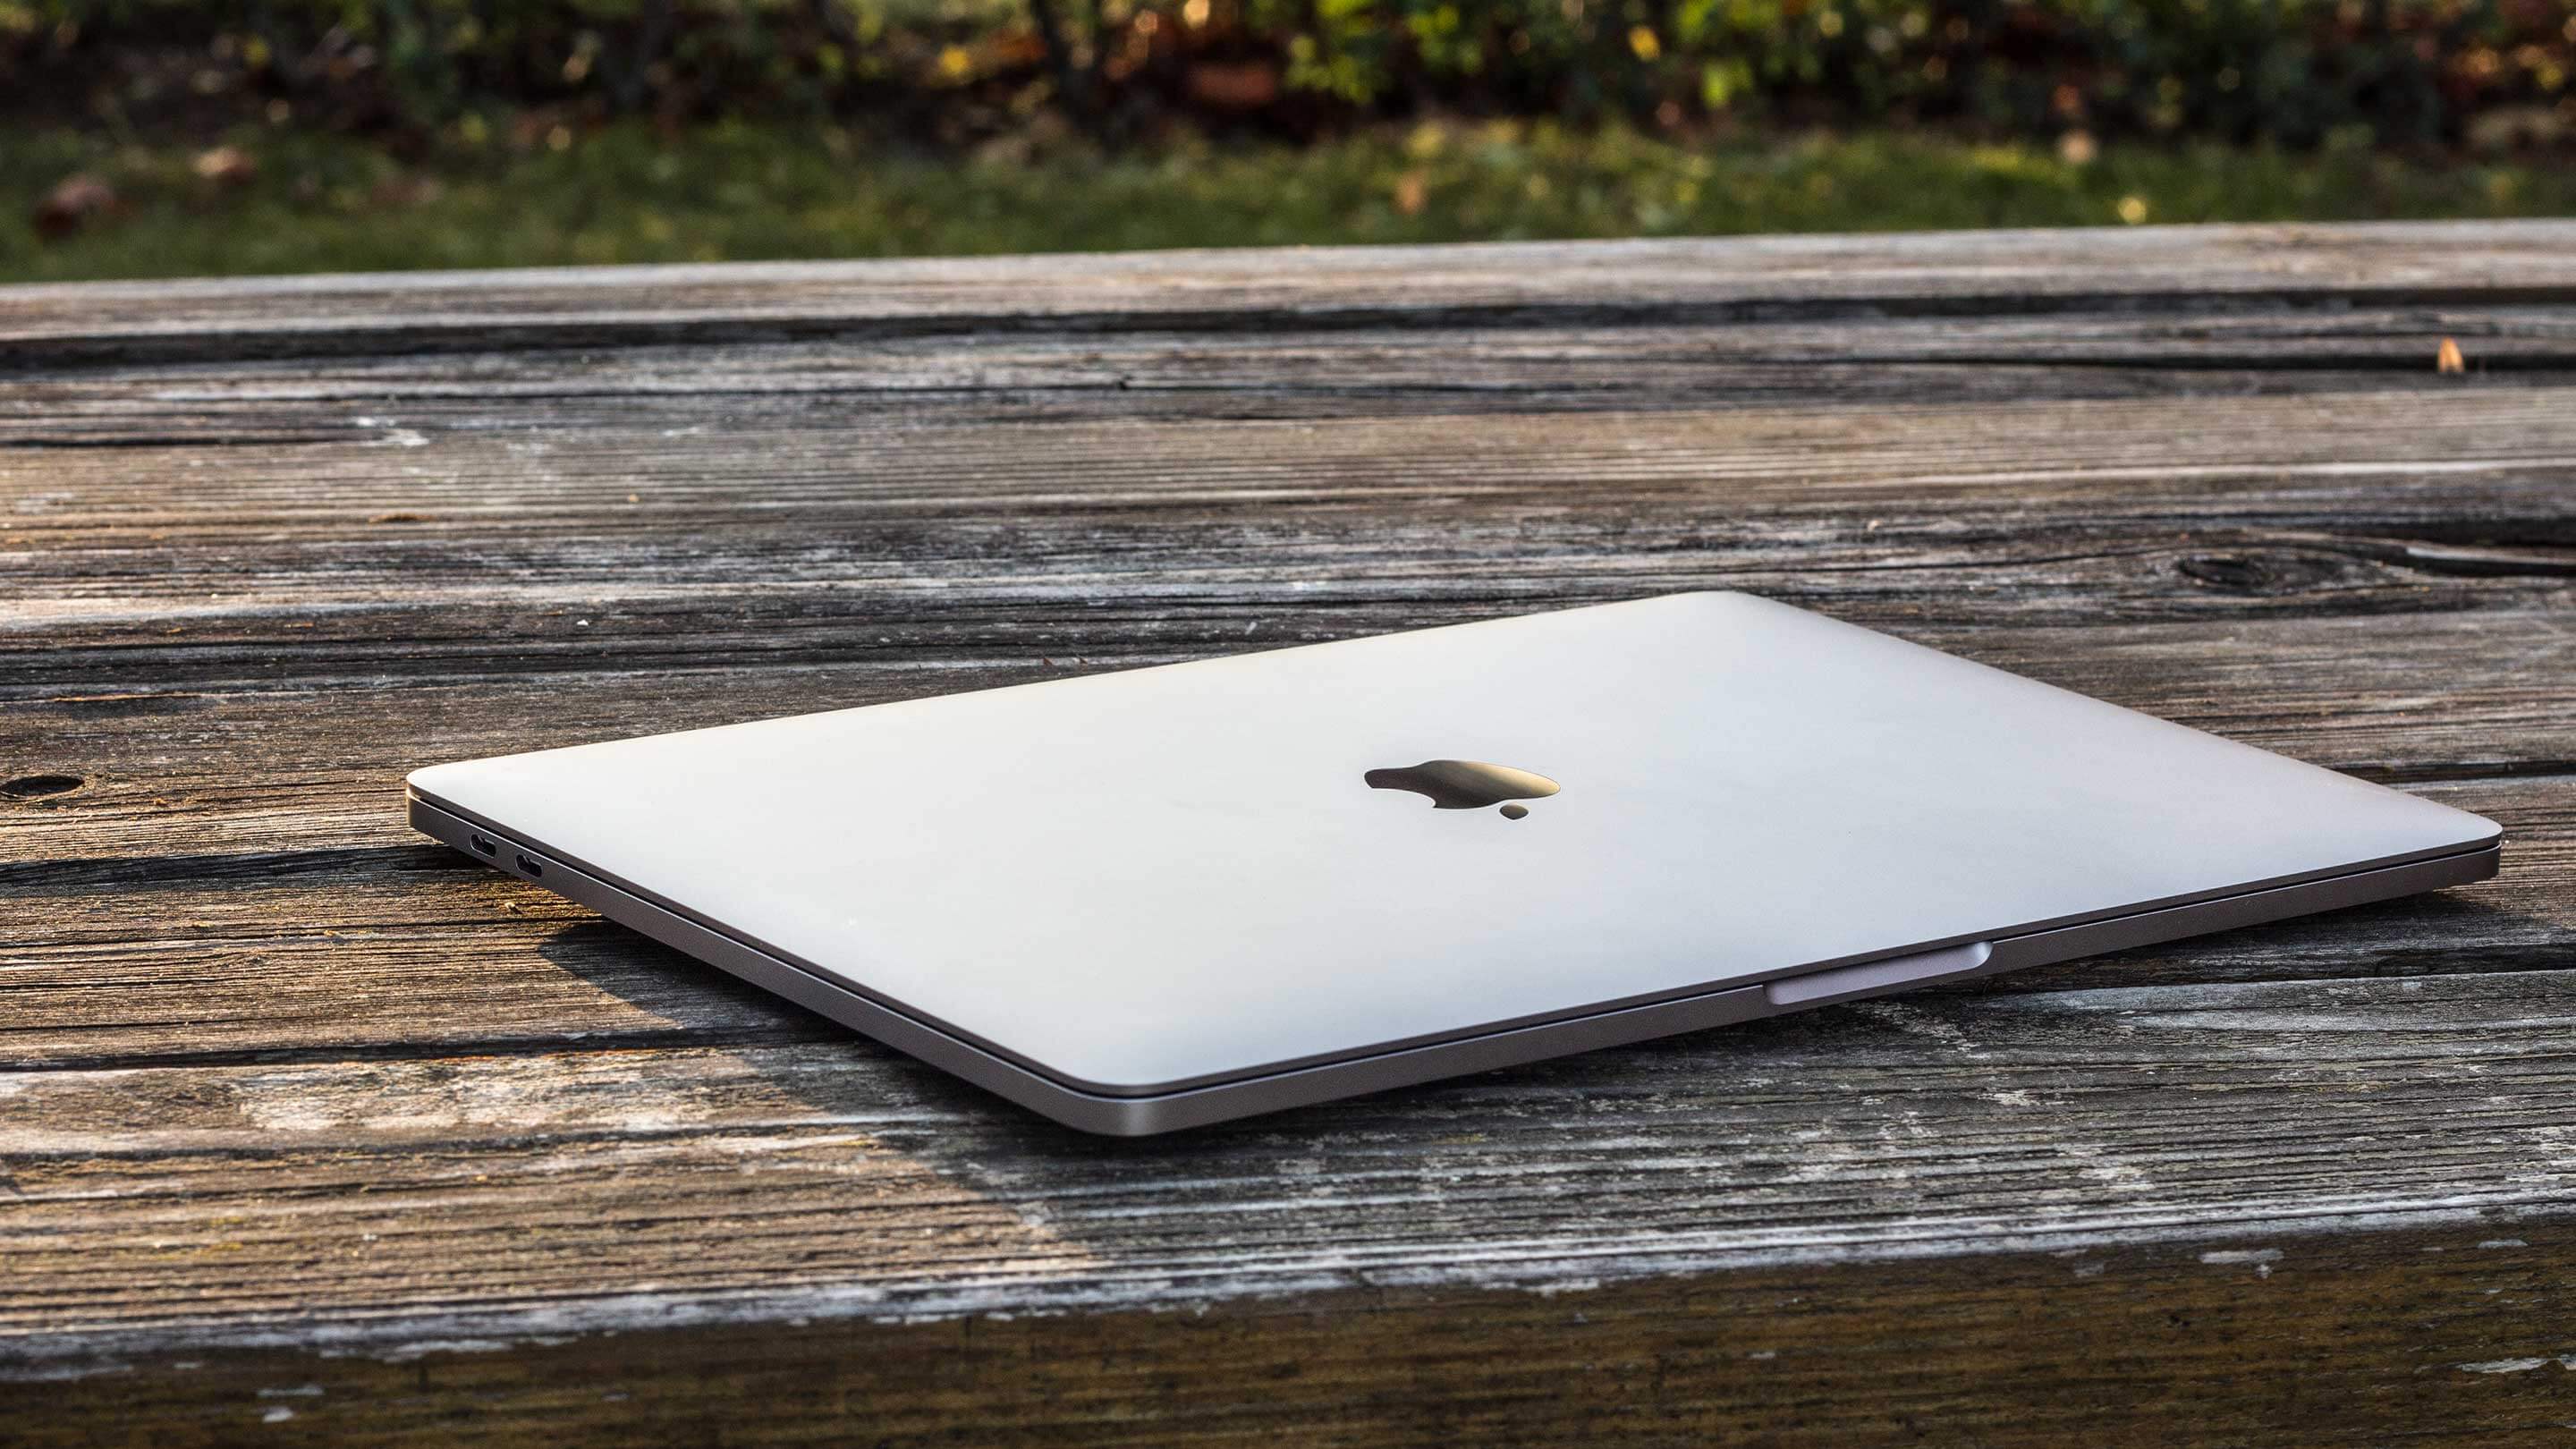 Apple MacBook Pro 13 Space Grey 2018 (MR9Q2)